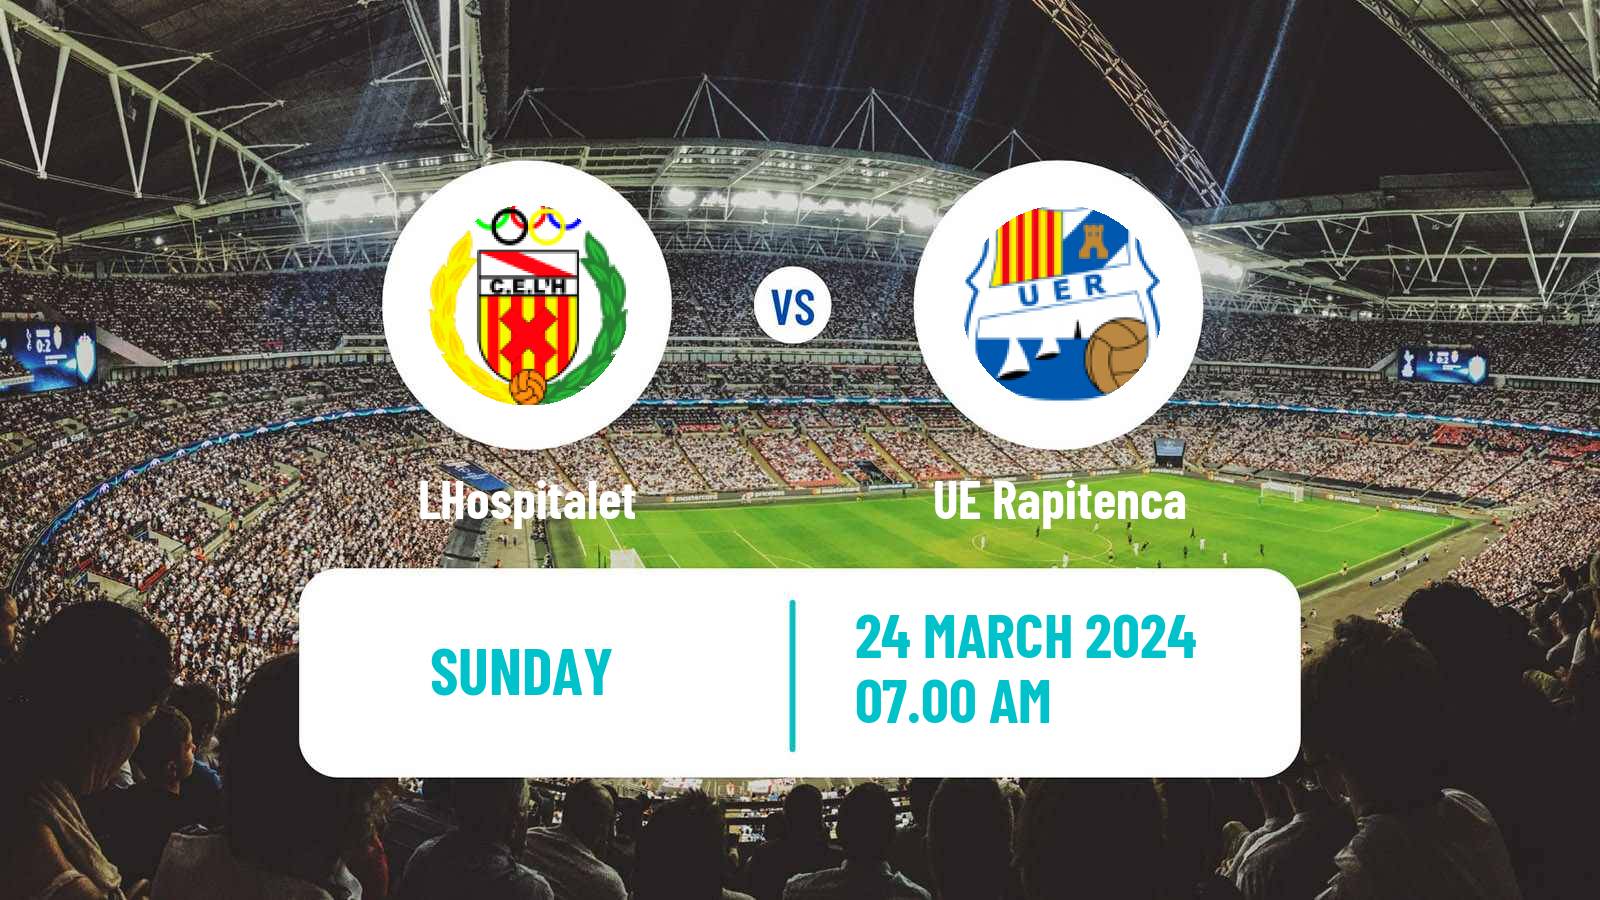 Soccer Spanish Tercera RFEF - Group 5 LHospitalet - Rapitenca